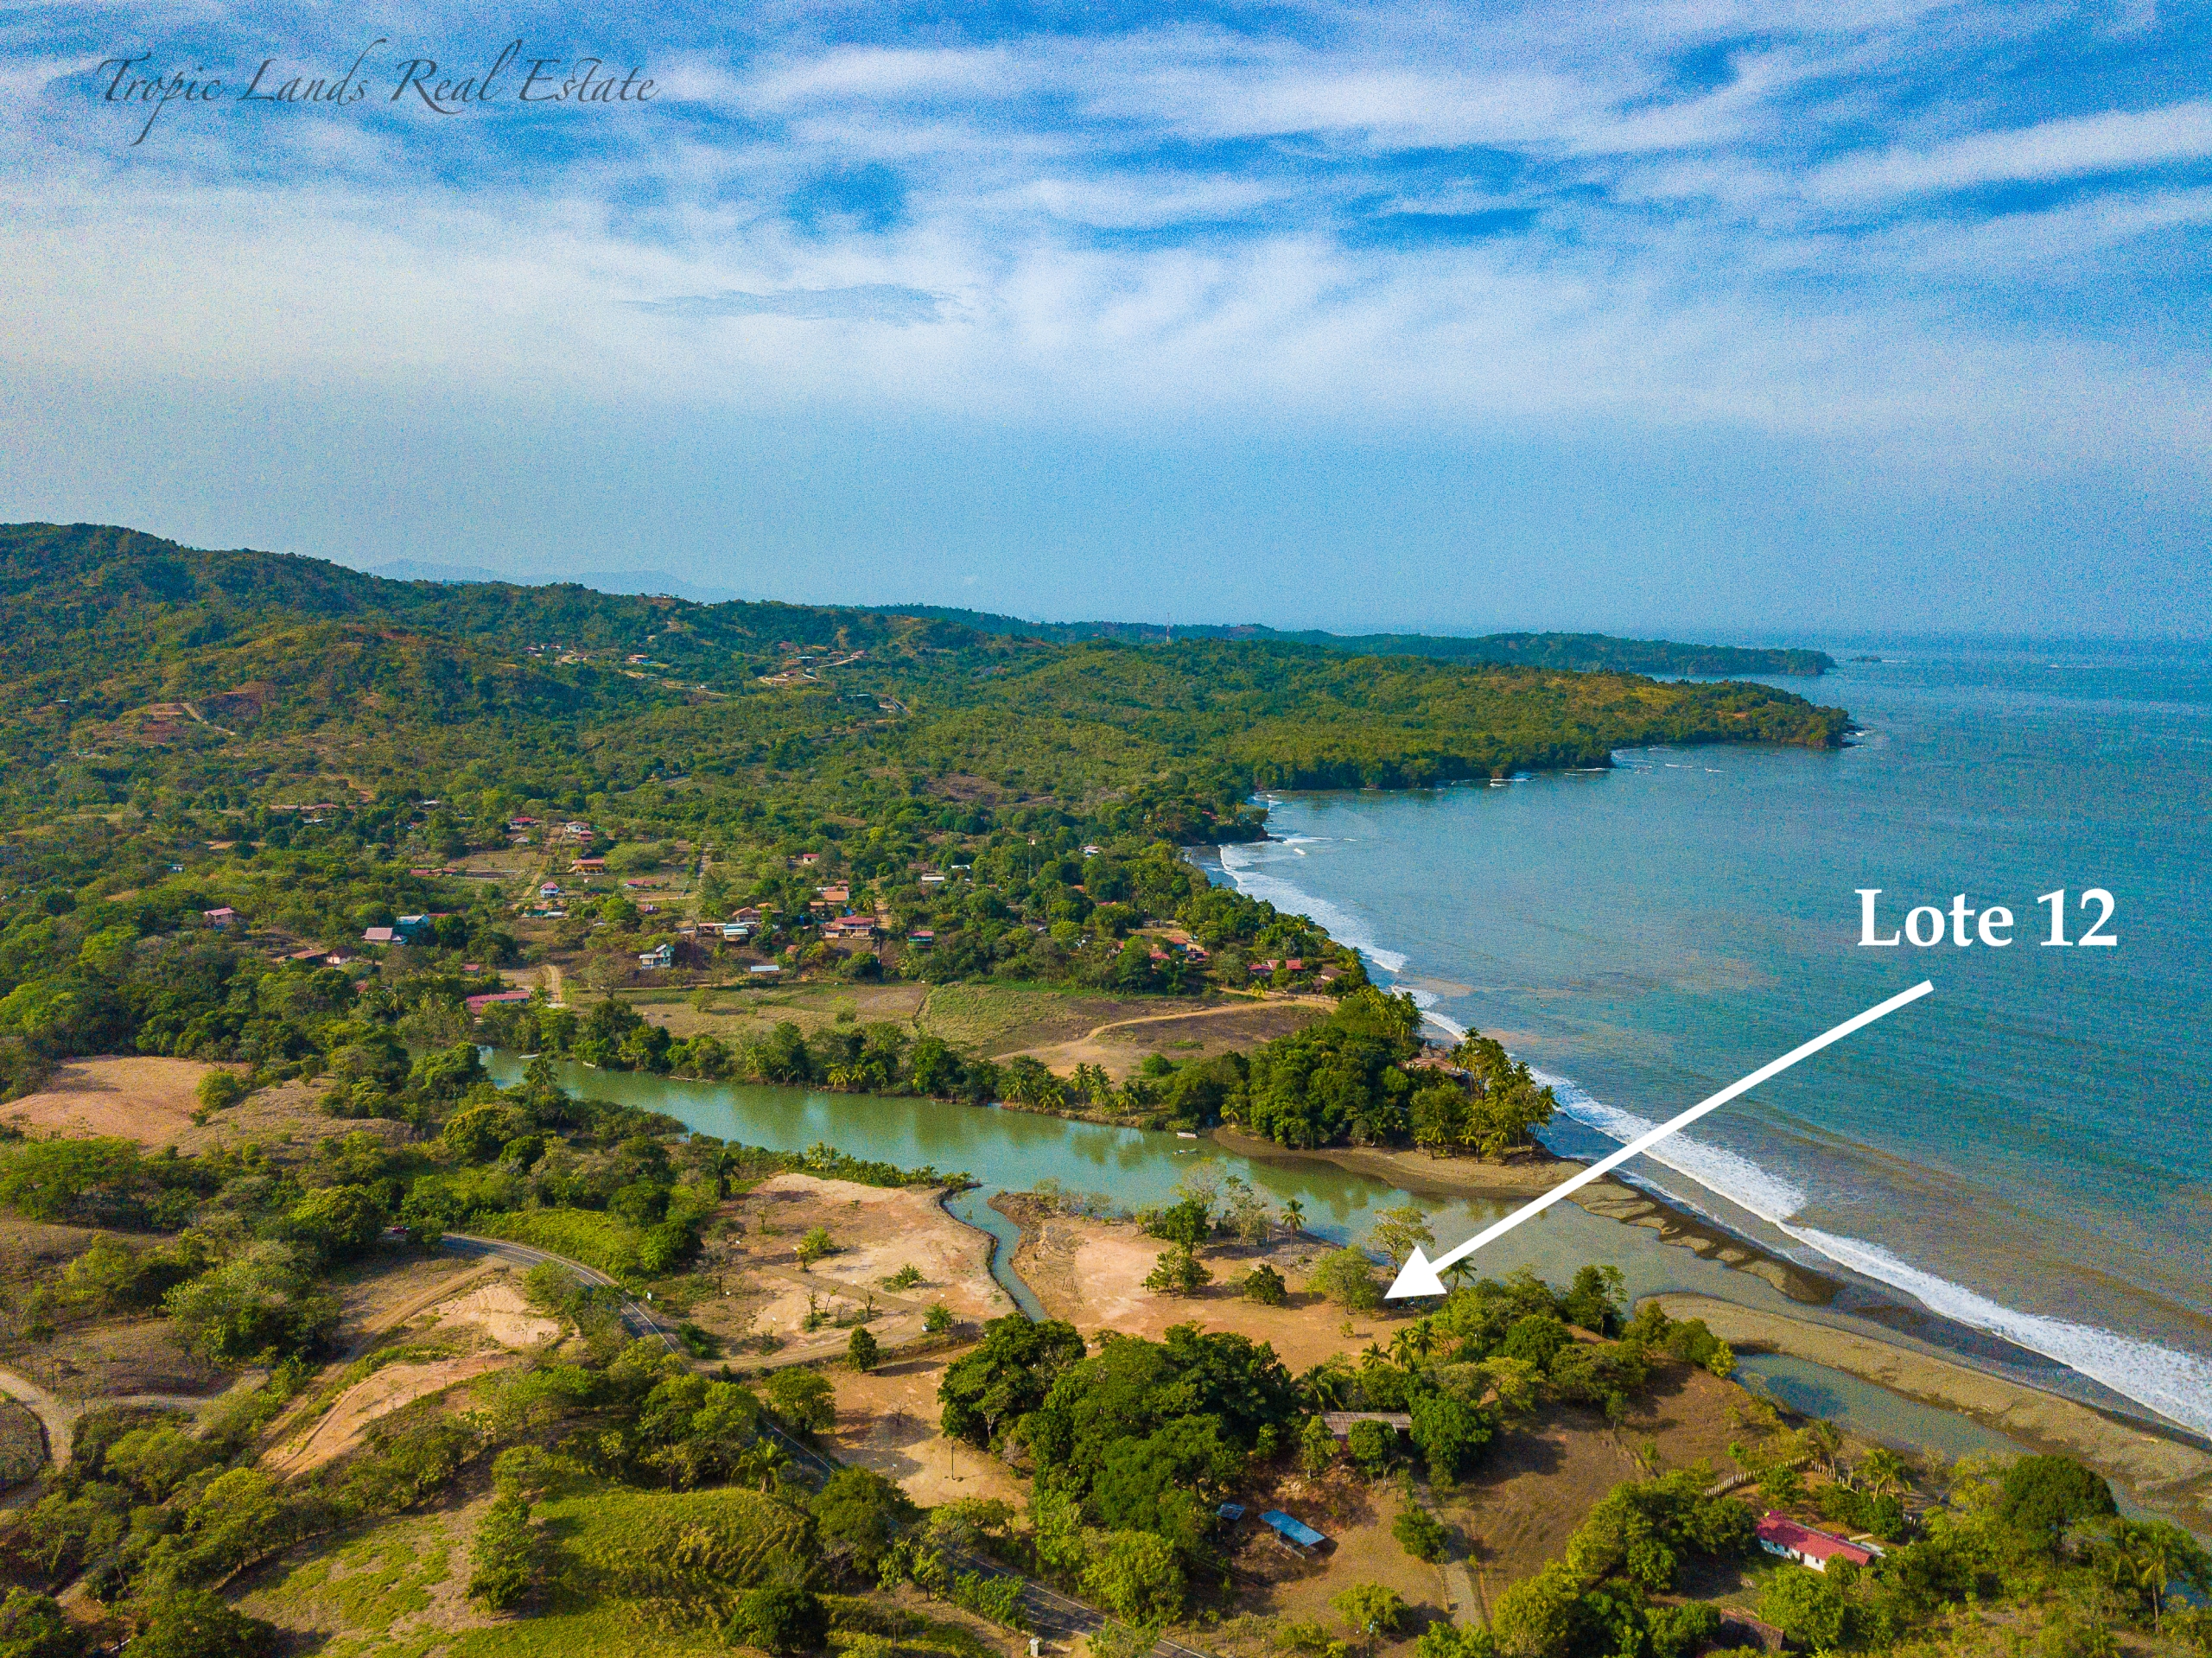 riverfront & beachfront property for sale in Torio, Veraguas, Panama - lotes de playa en torio